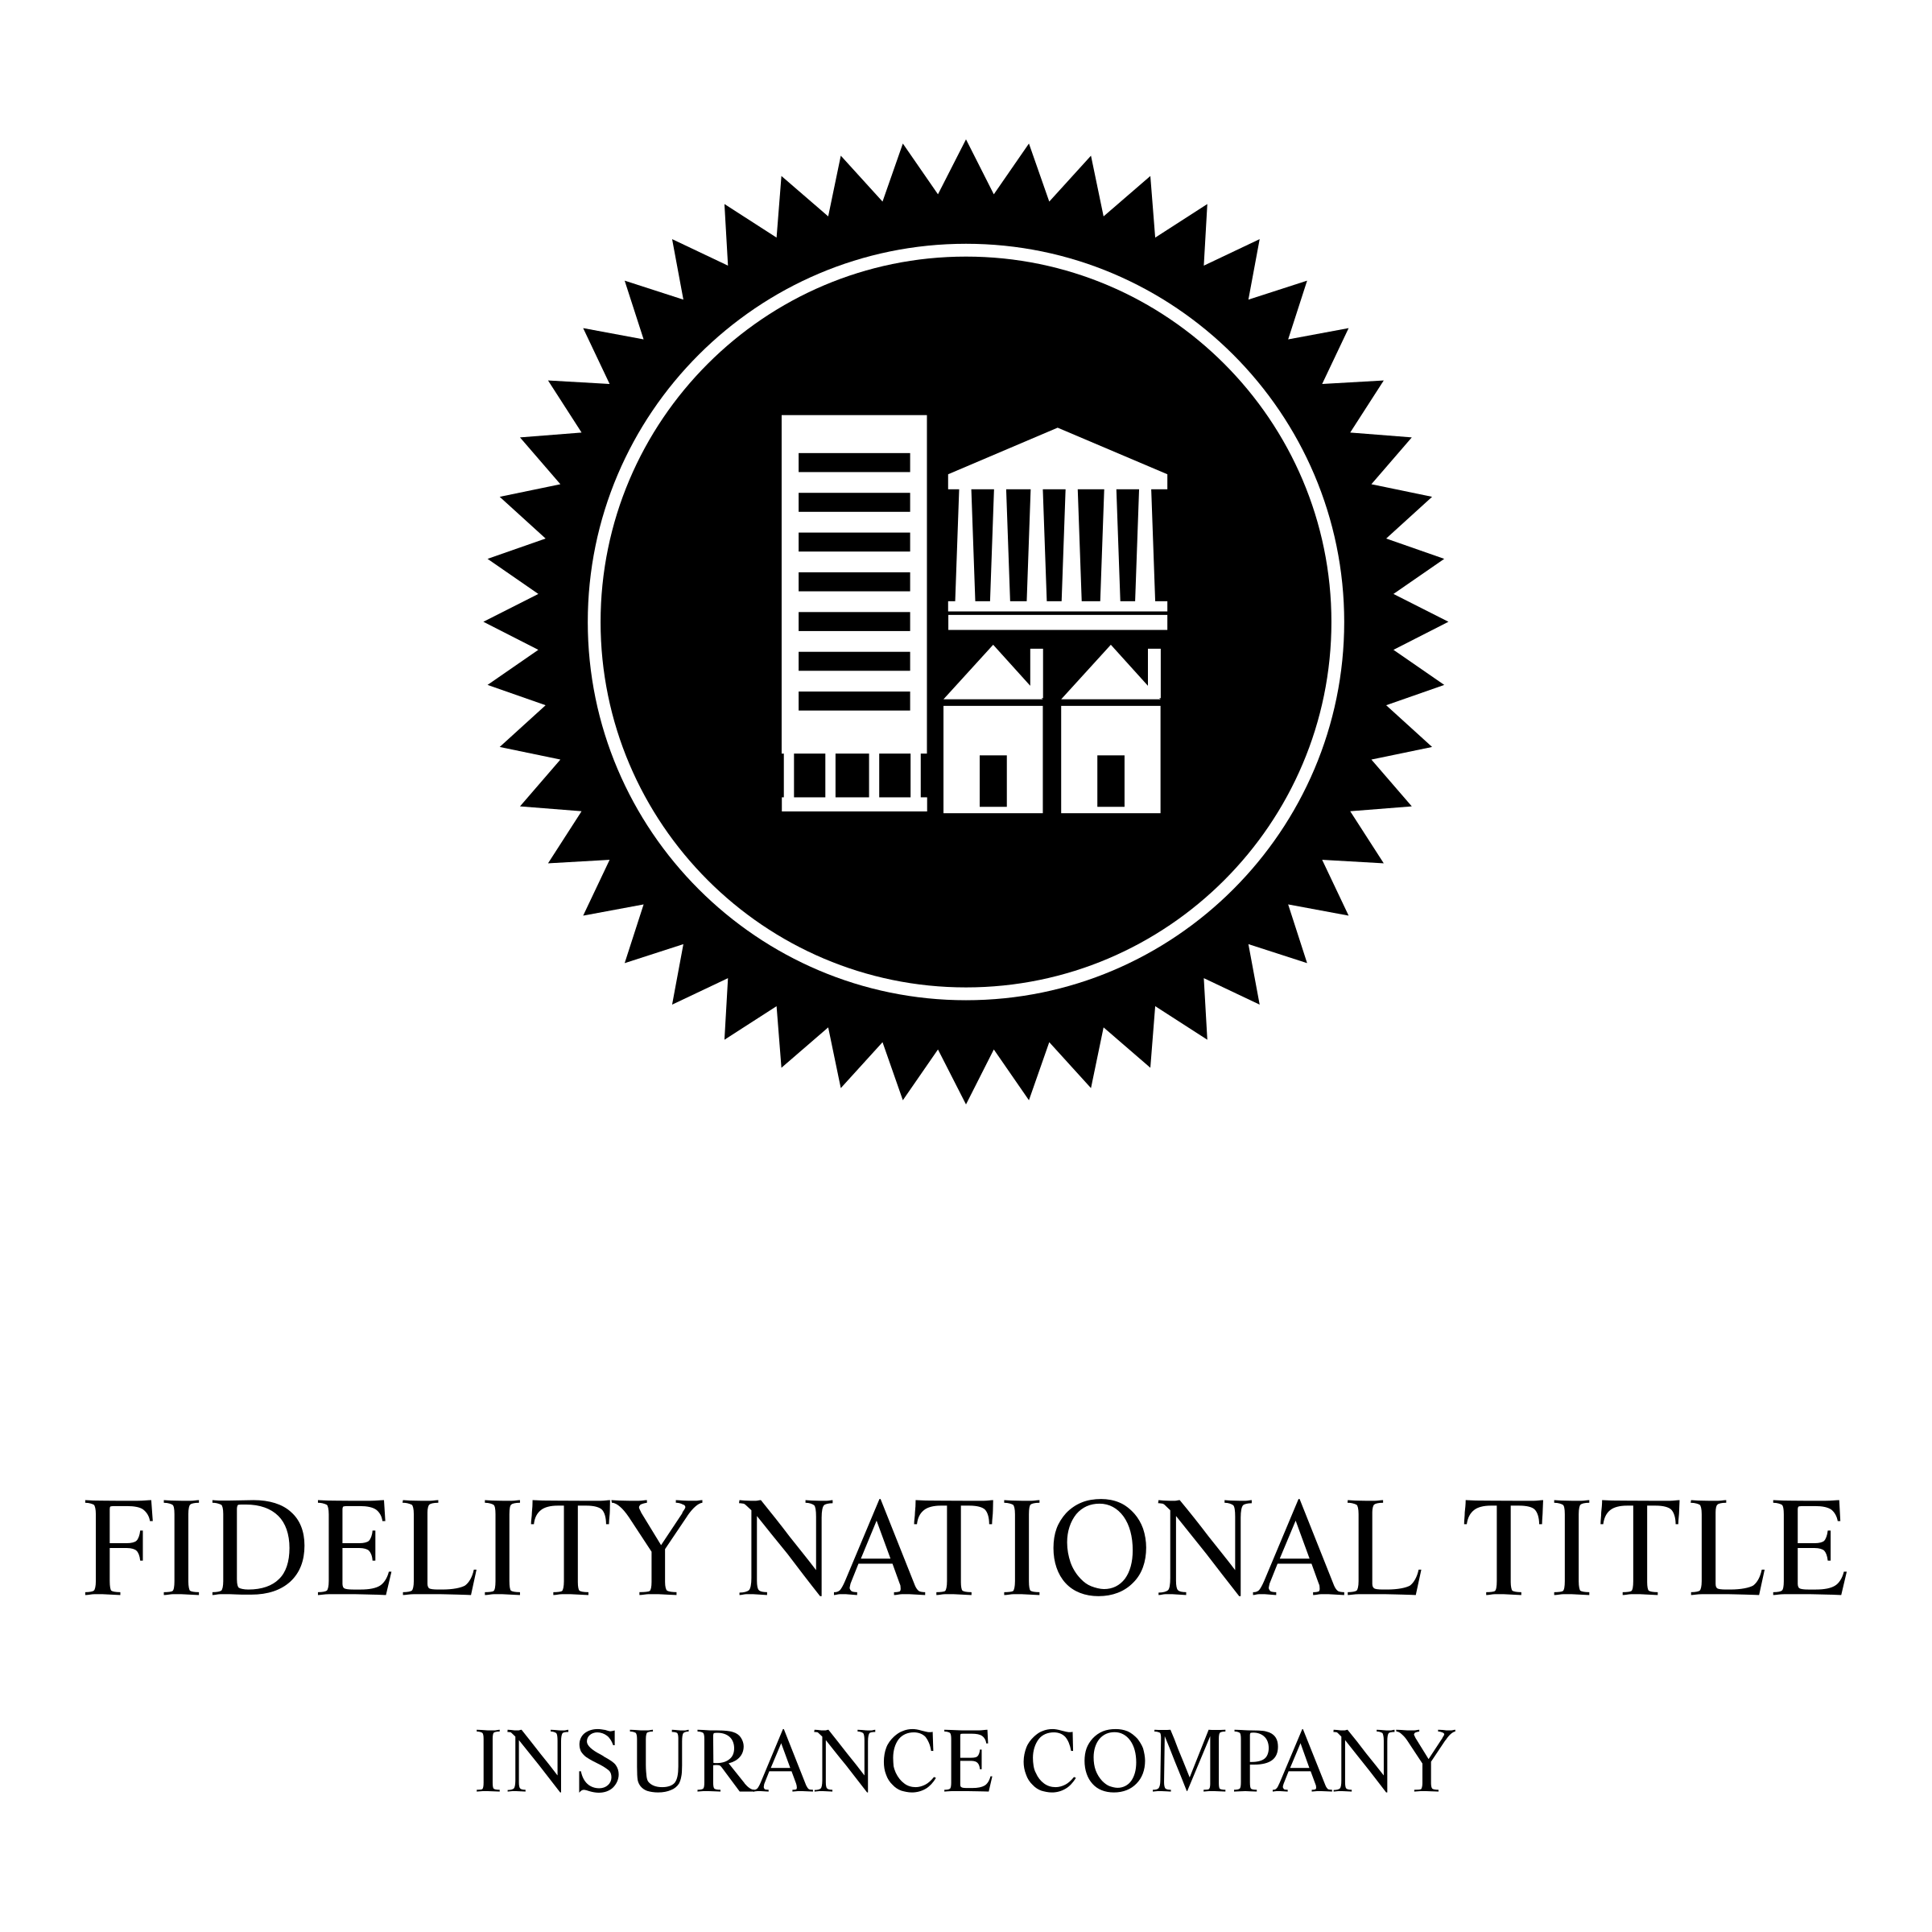 Fidelity Company Logo - Fidelity National Title Logo PNG Transparent & SVG Vector